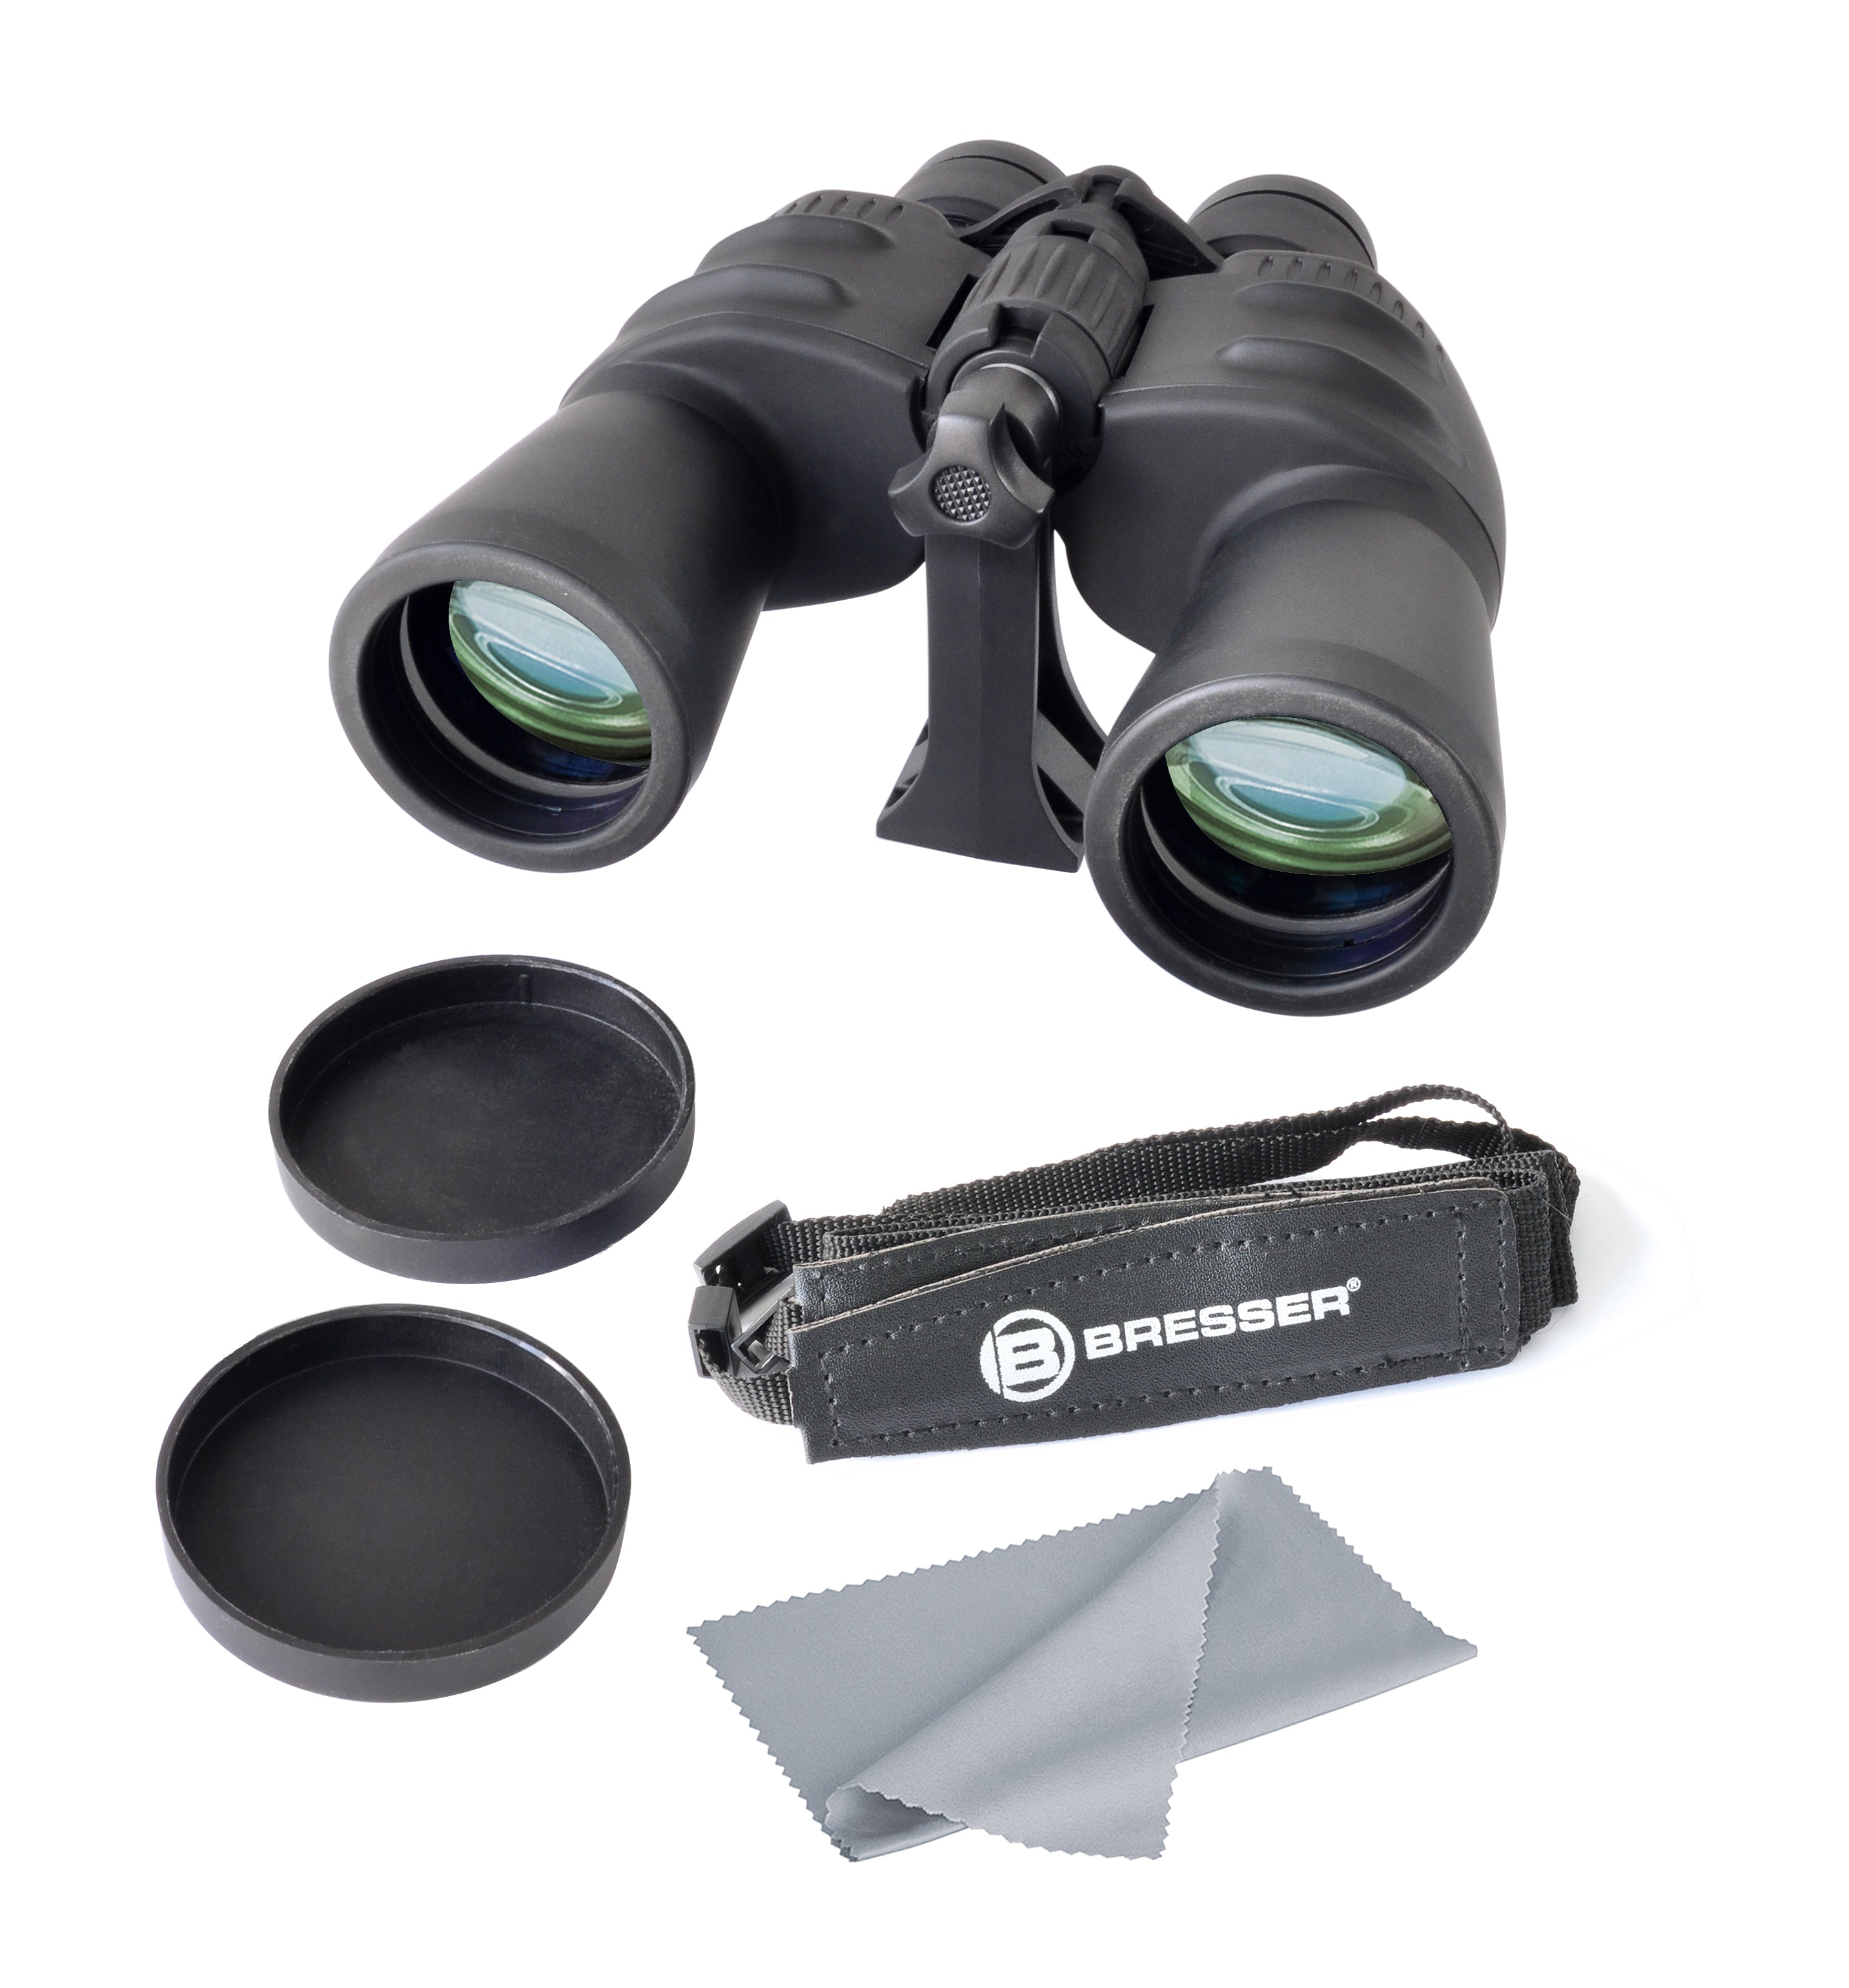 Special Zoomar 7-35x50 Zoom Binoculars